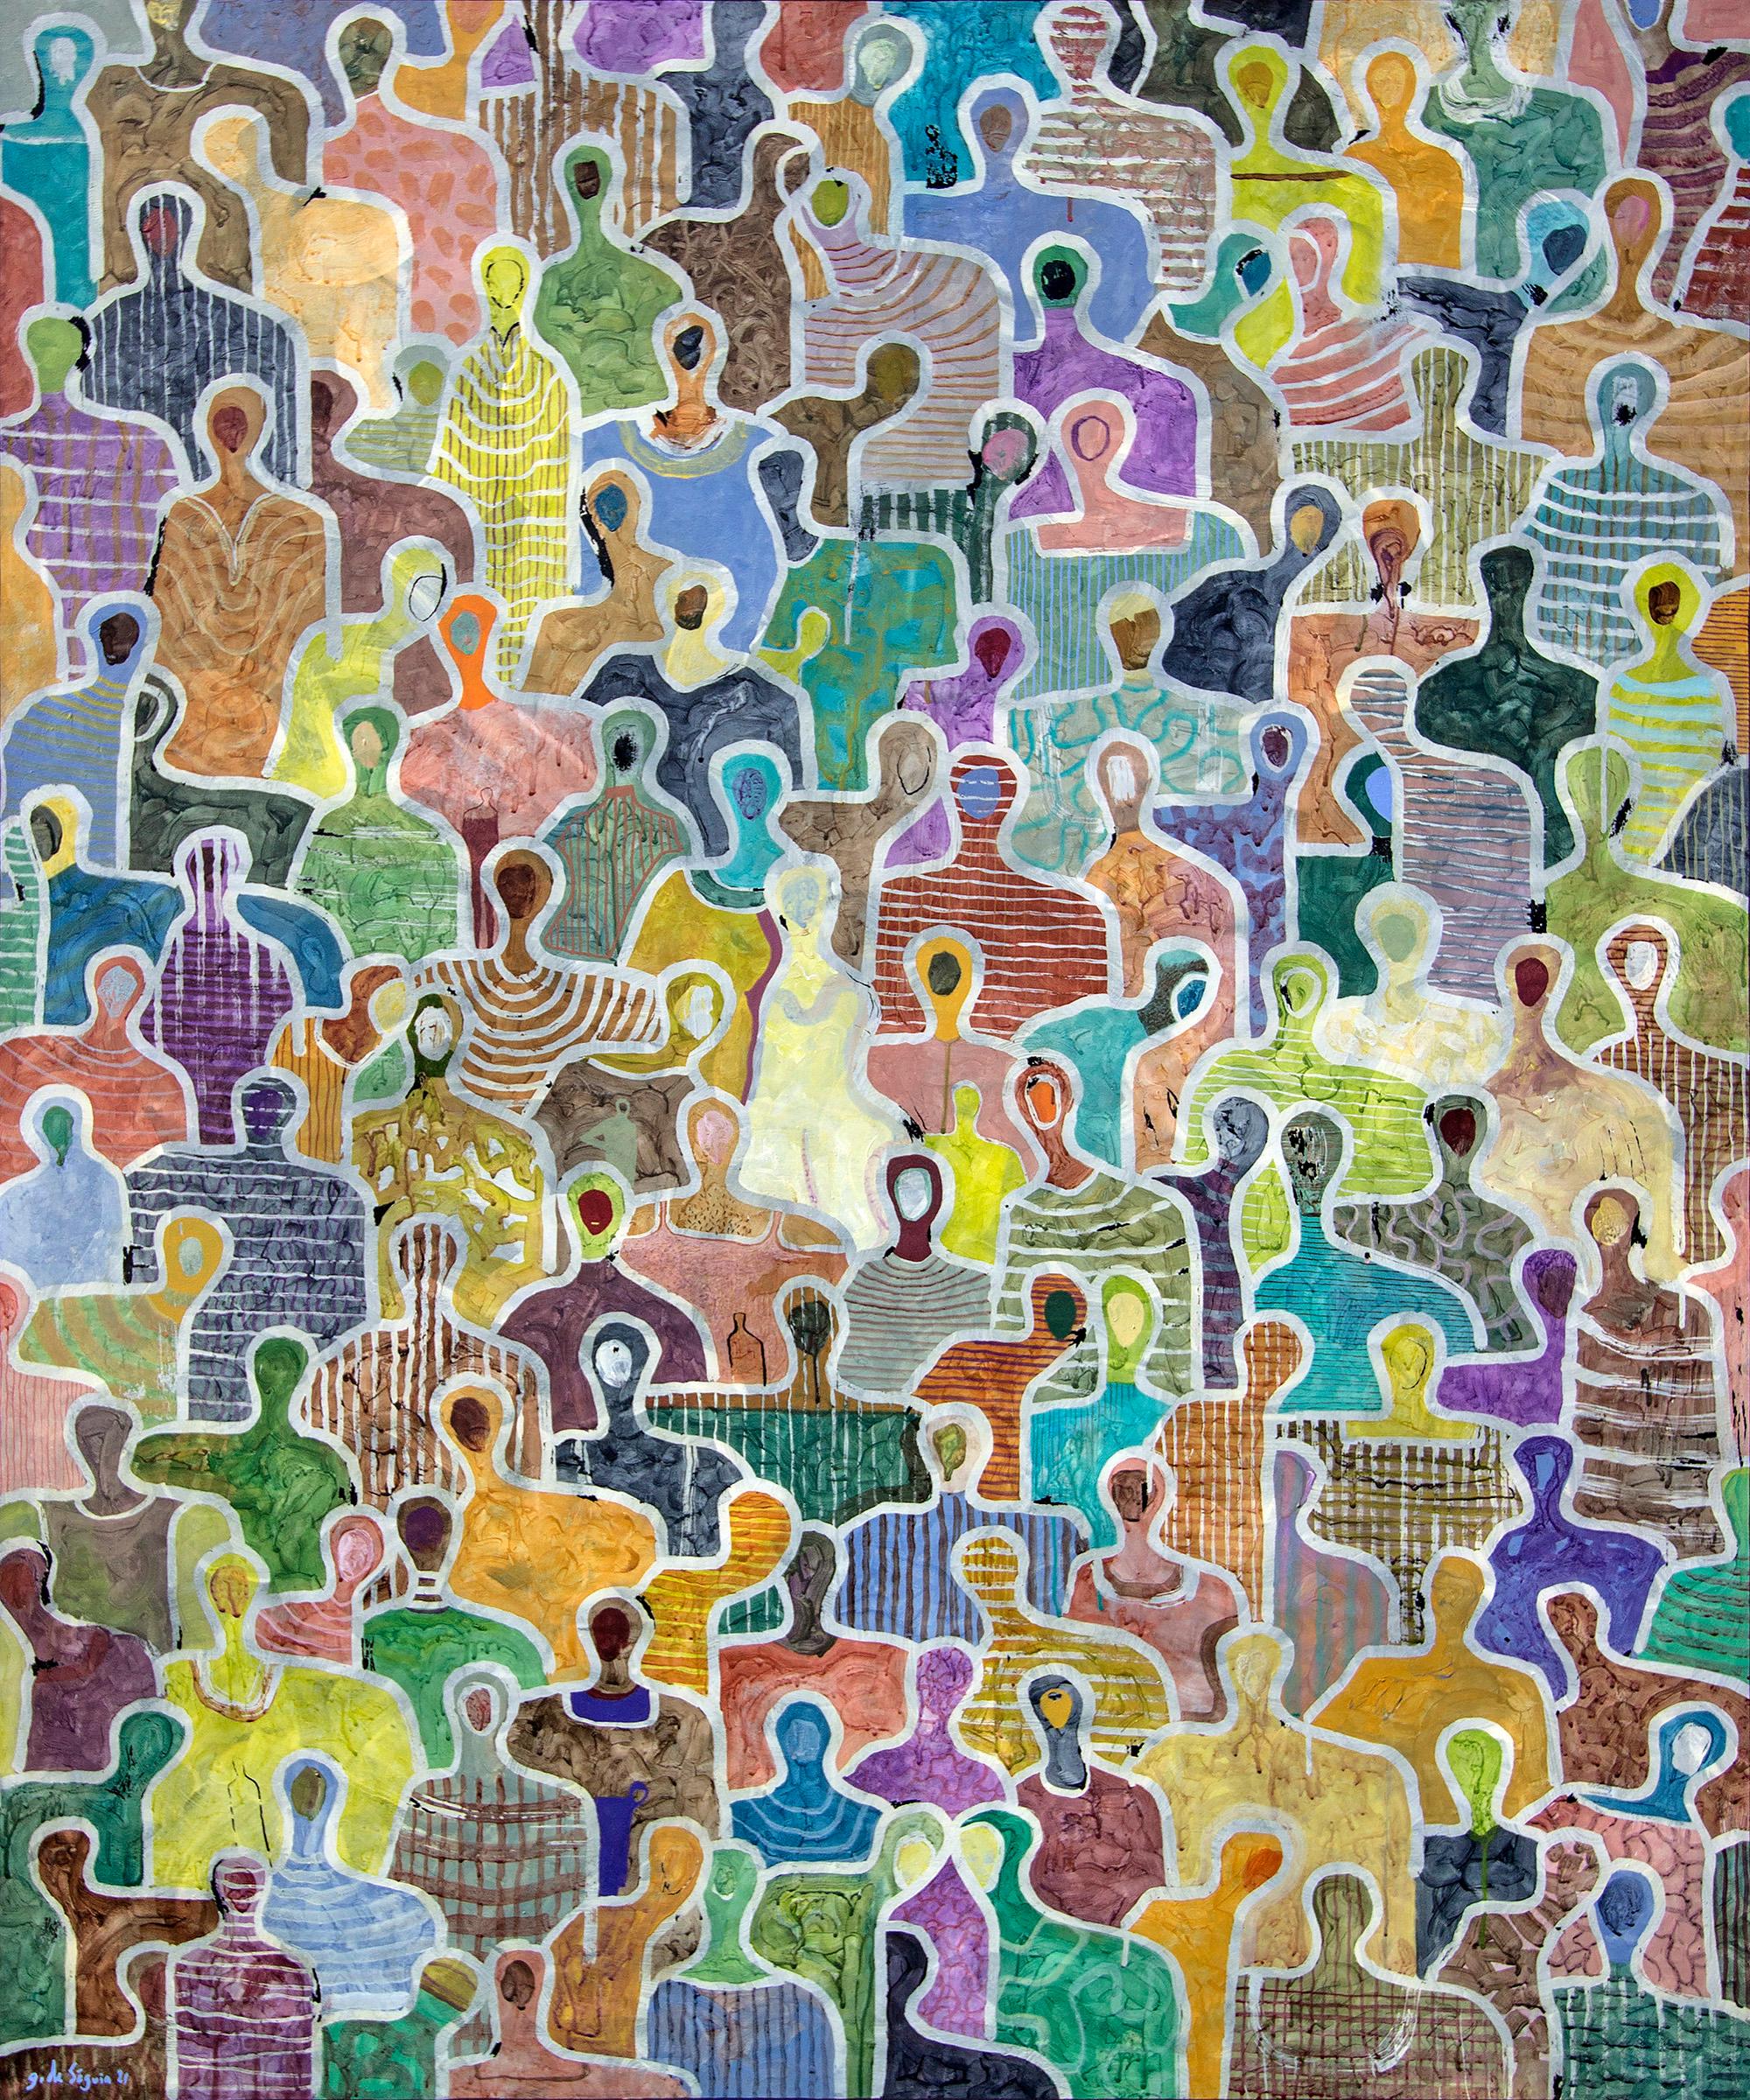 Figurative Painting Gaëtan de Seguin - Happy Crowd de Gaetan de Seguin - Peinture abstraite contemporaine